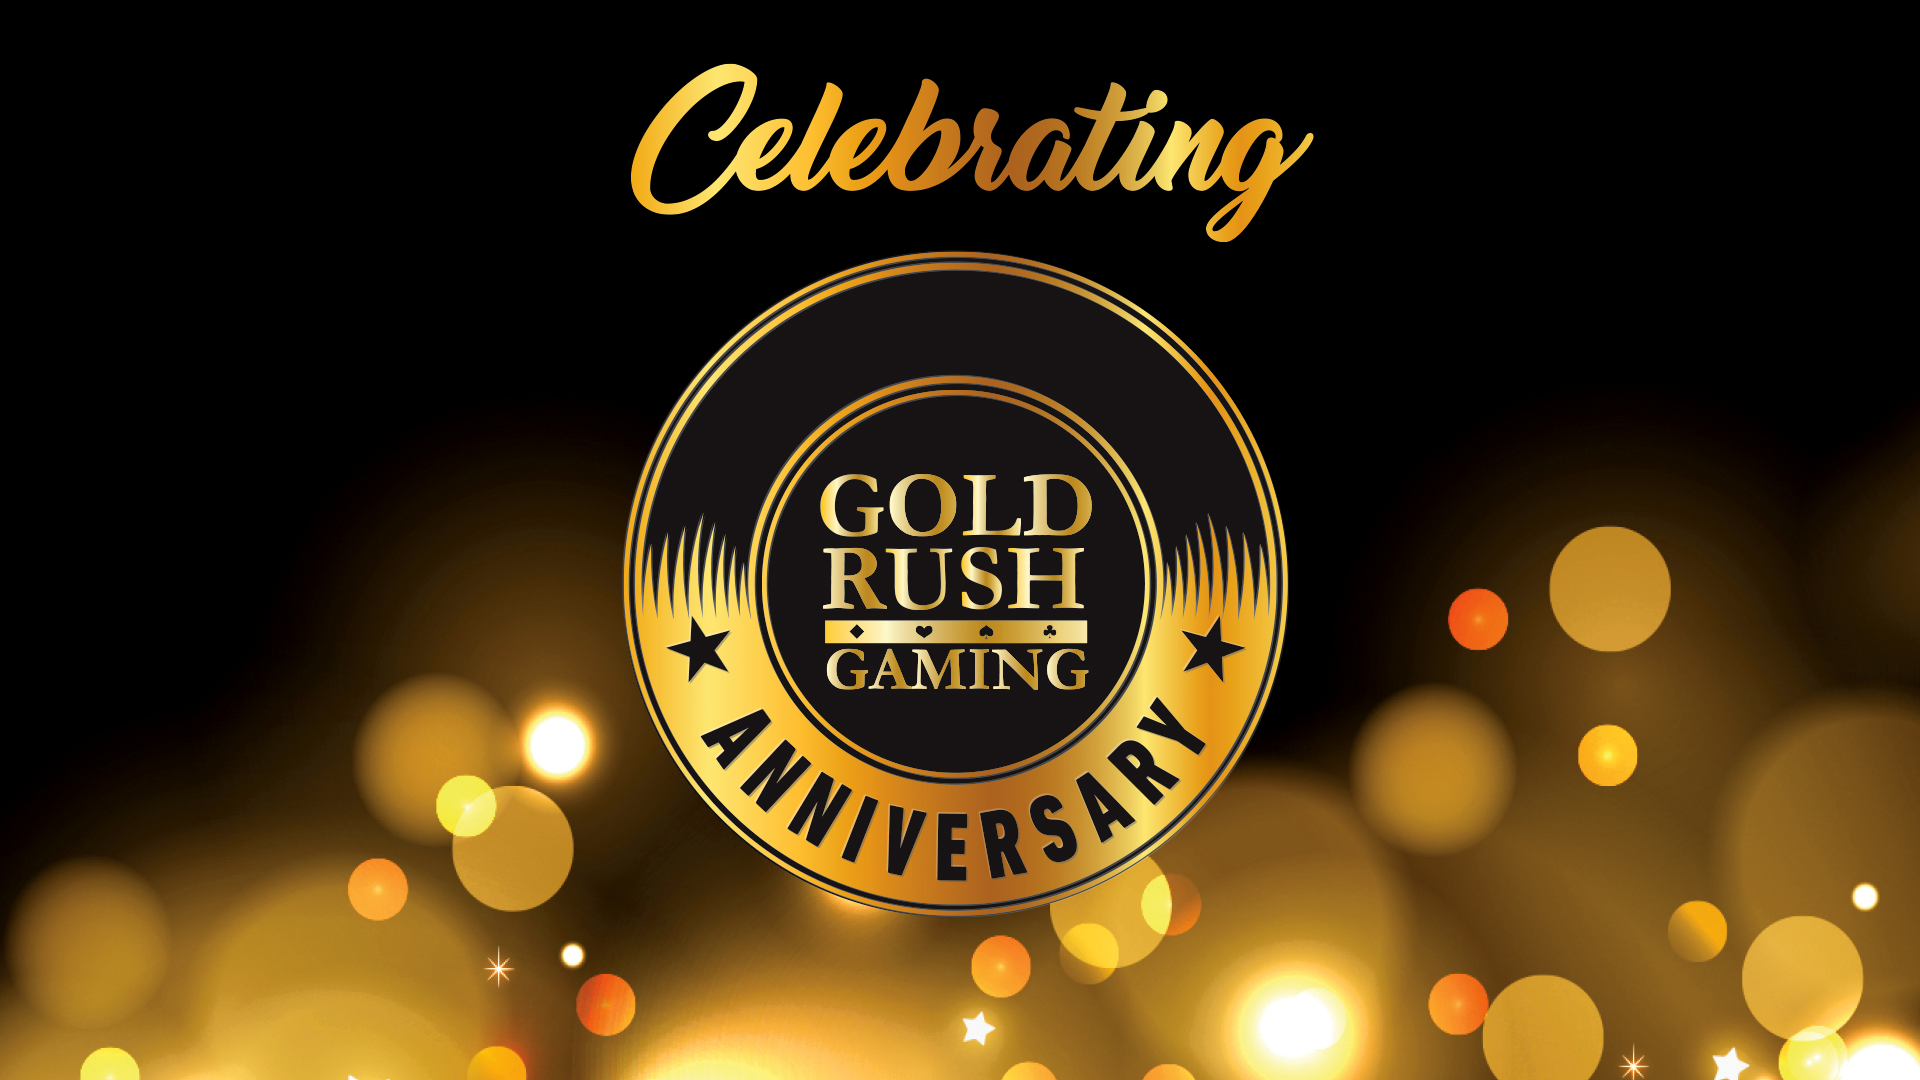 Gold Rush Gaming - Marketing